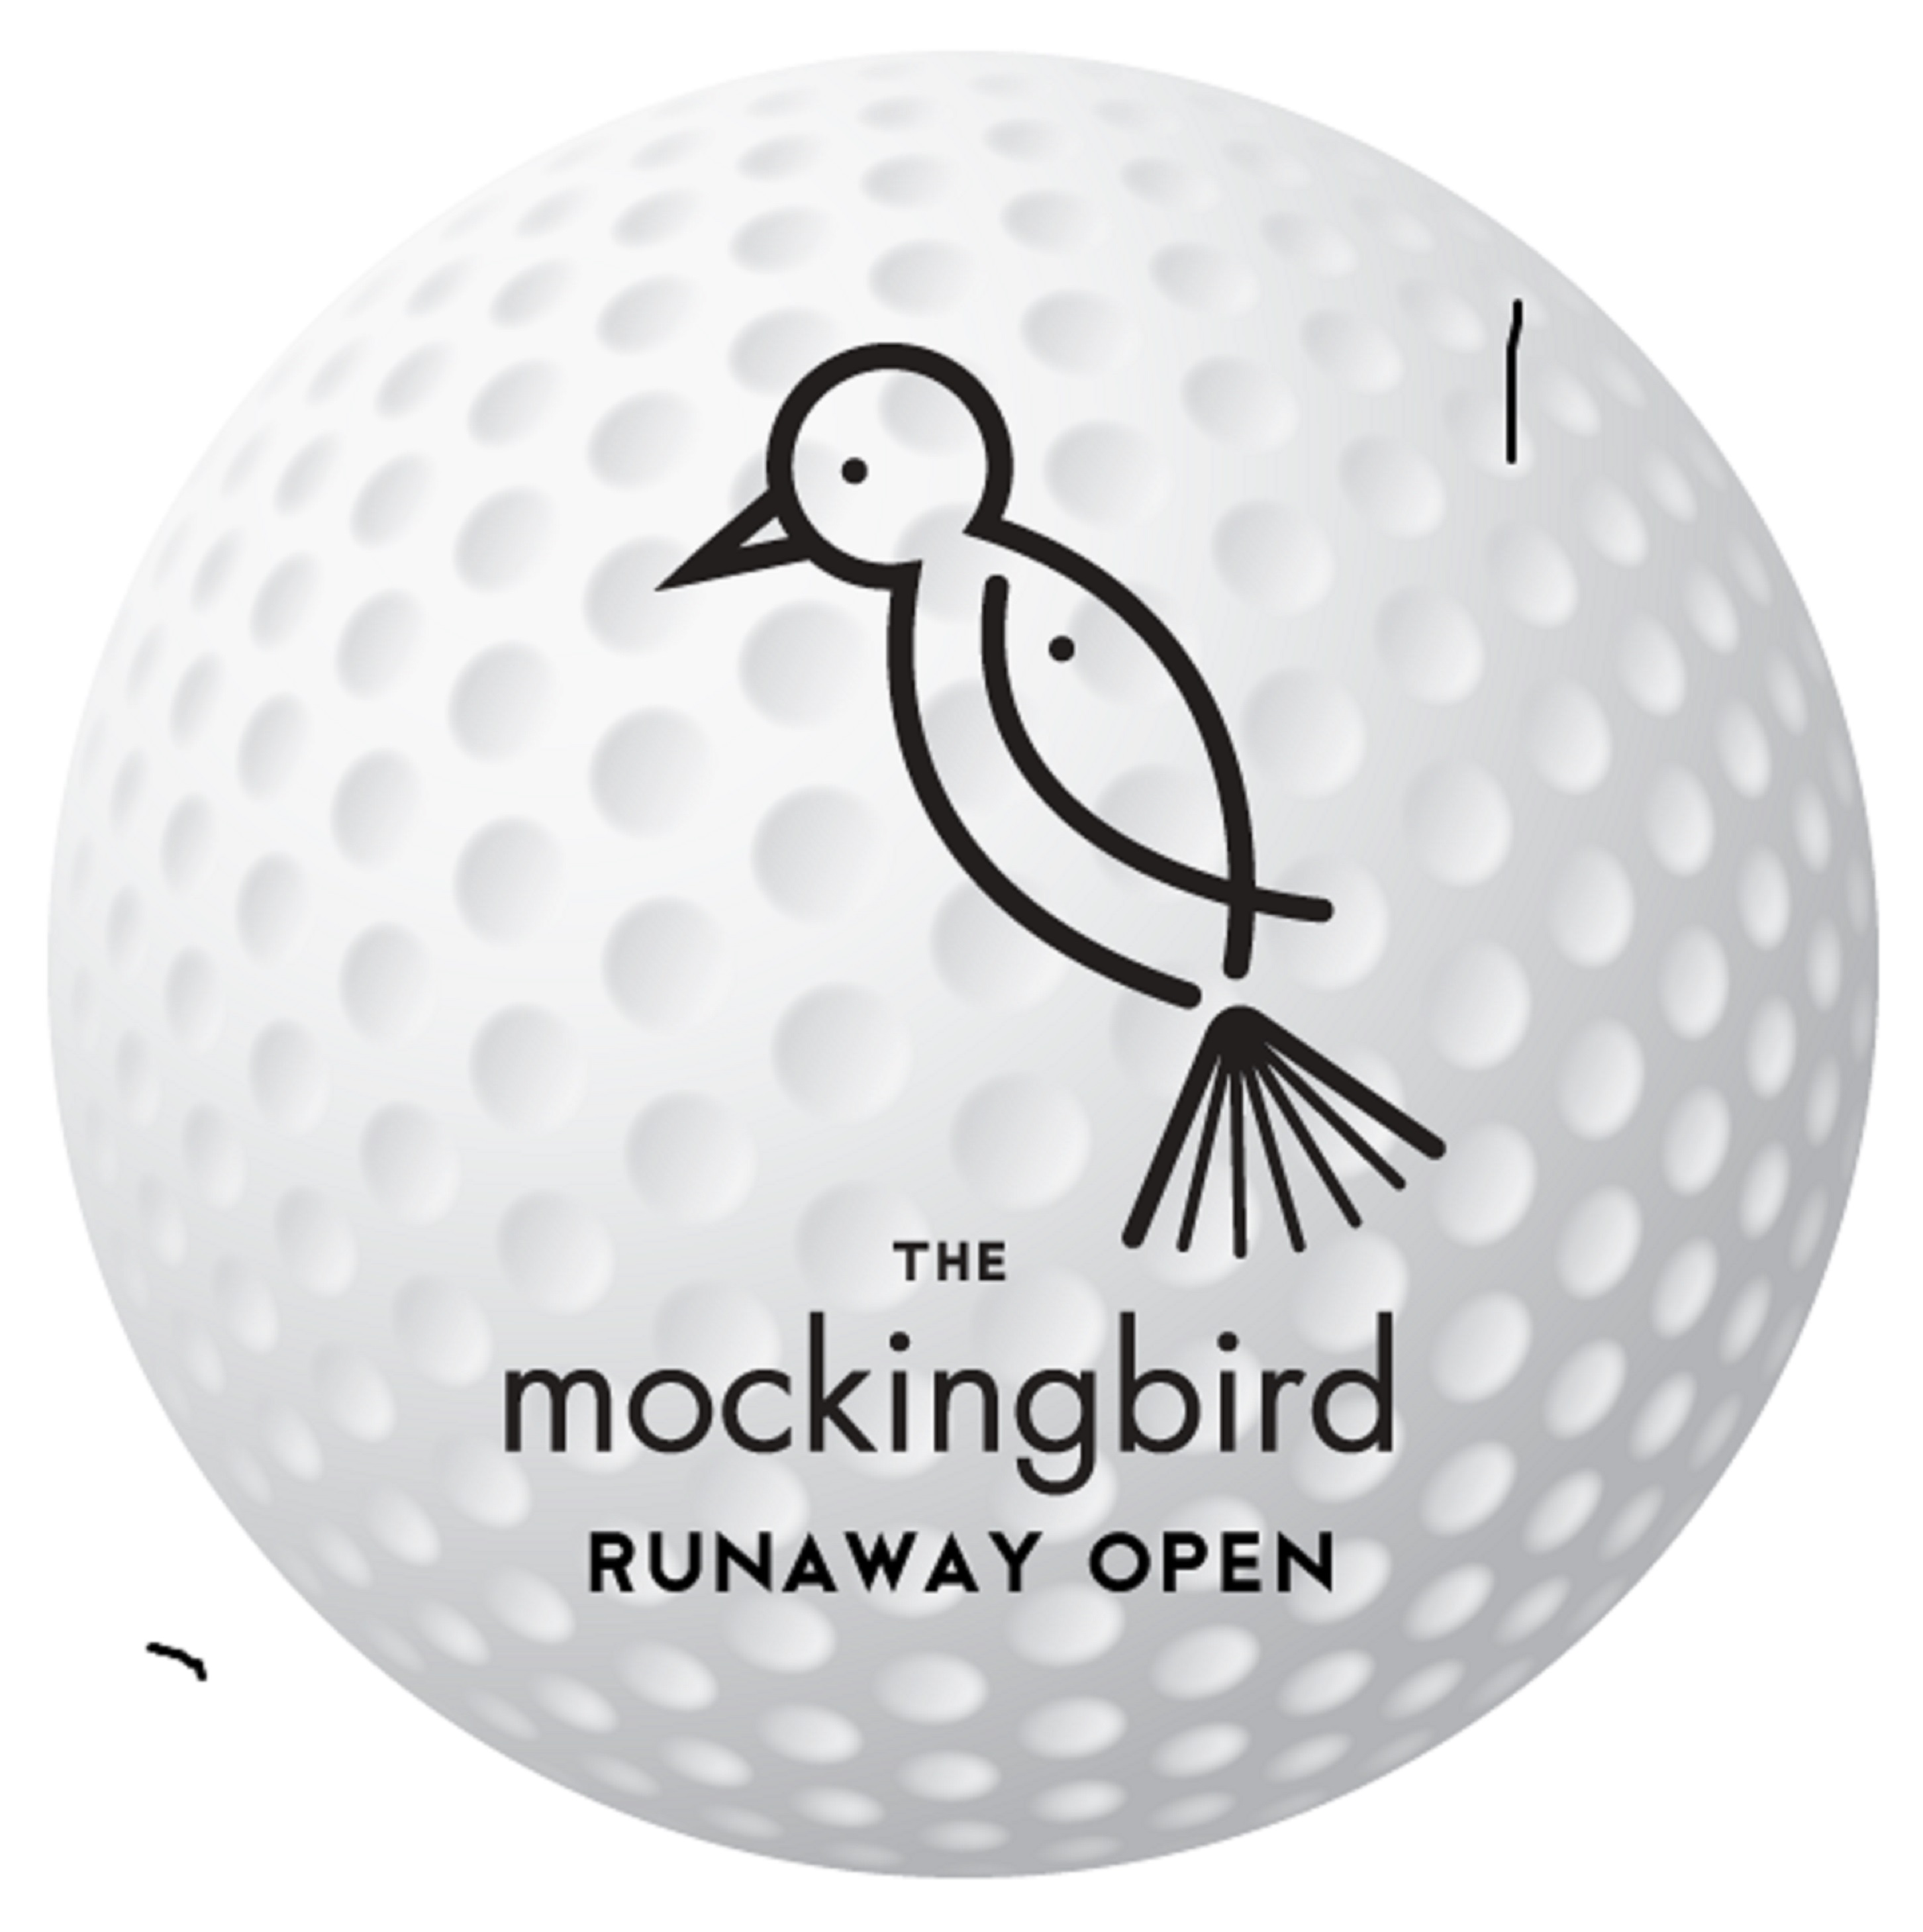 Register now for Mockingbird Foundation's Runaway Open